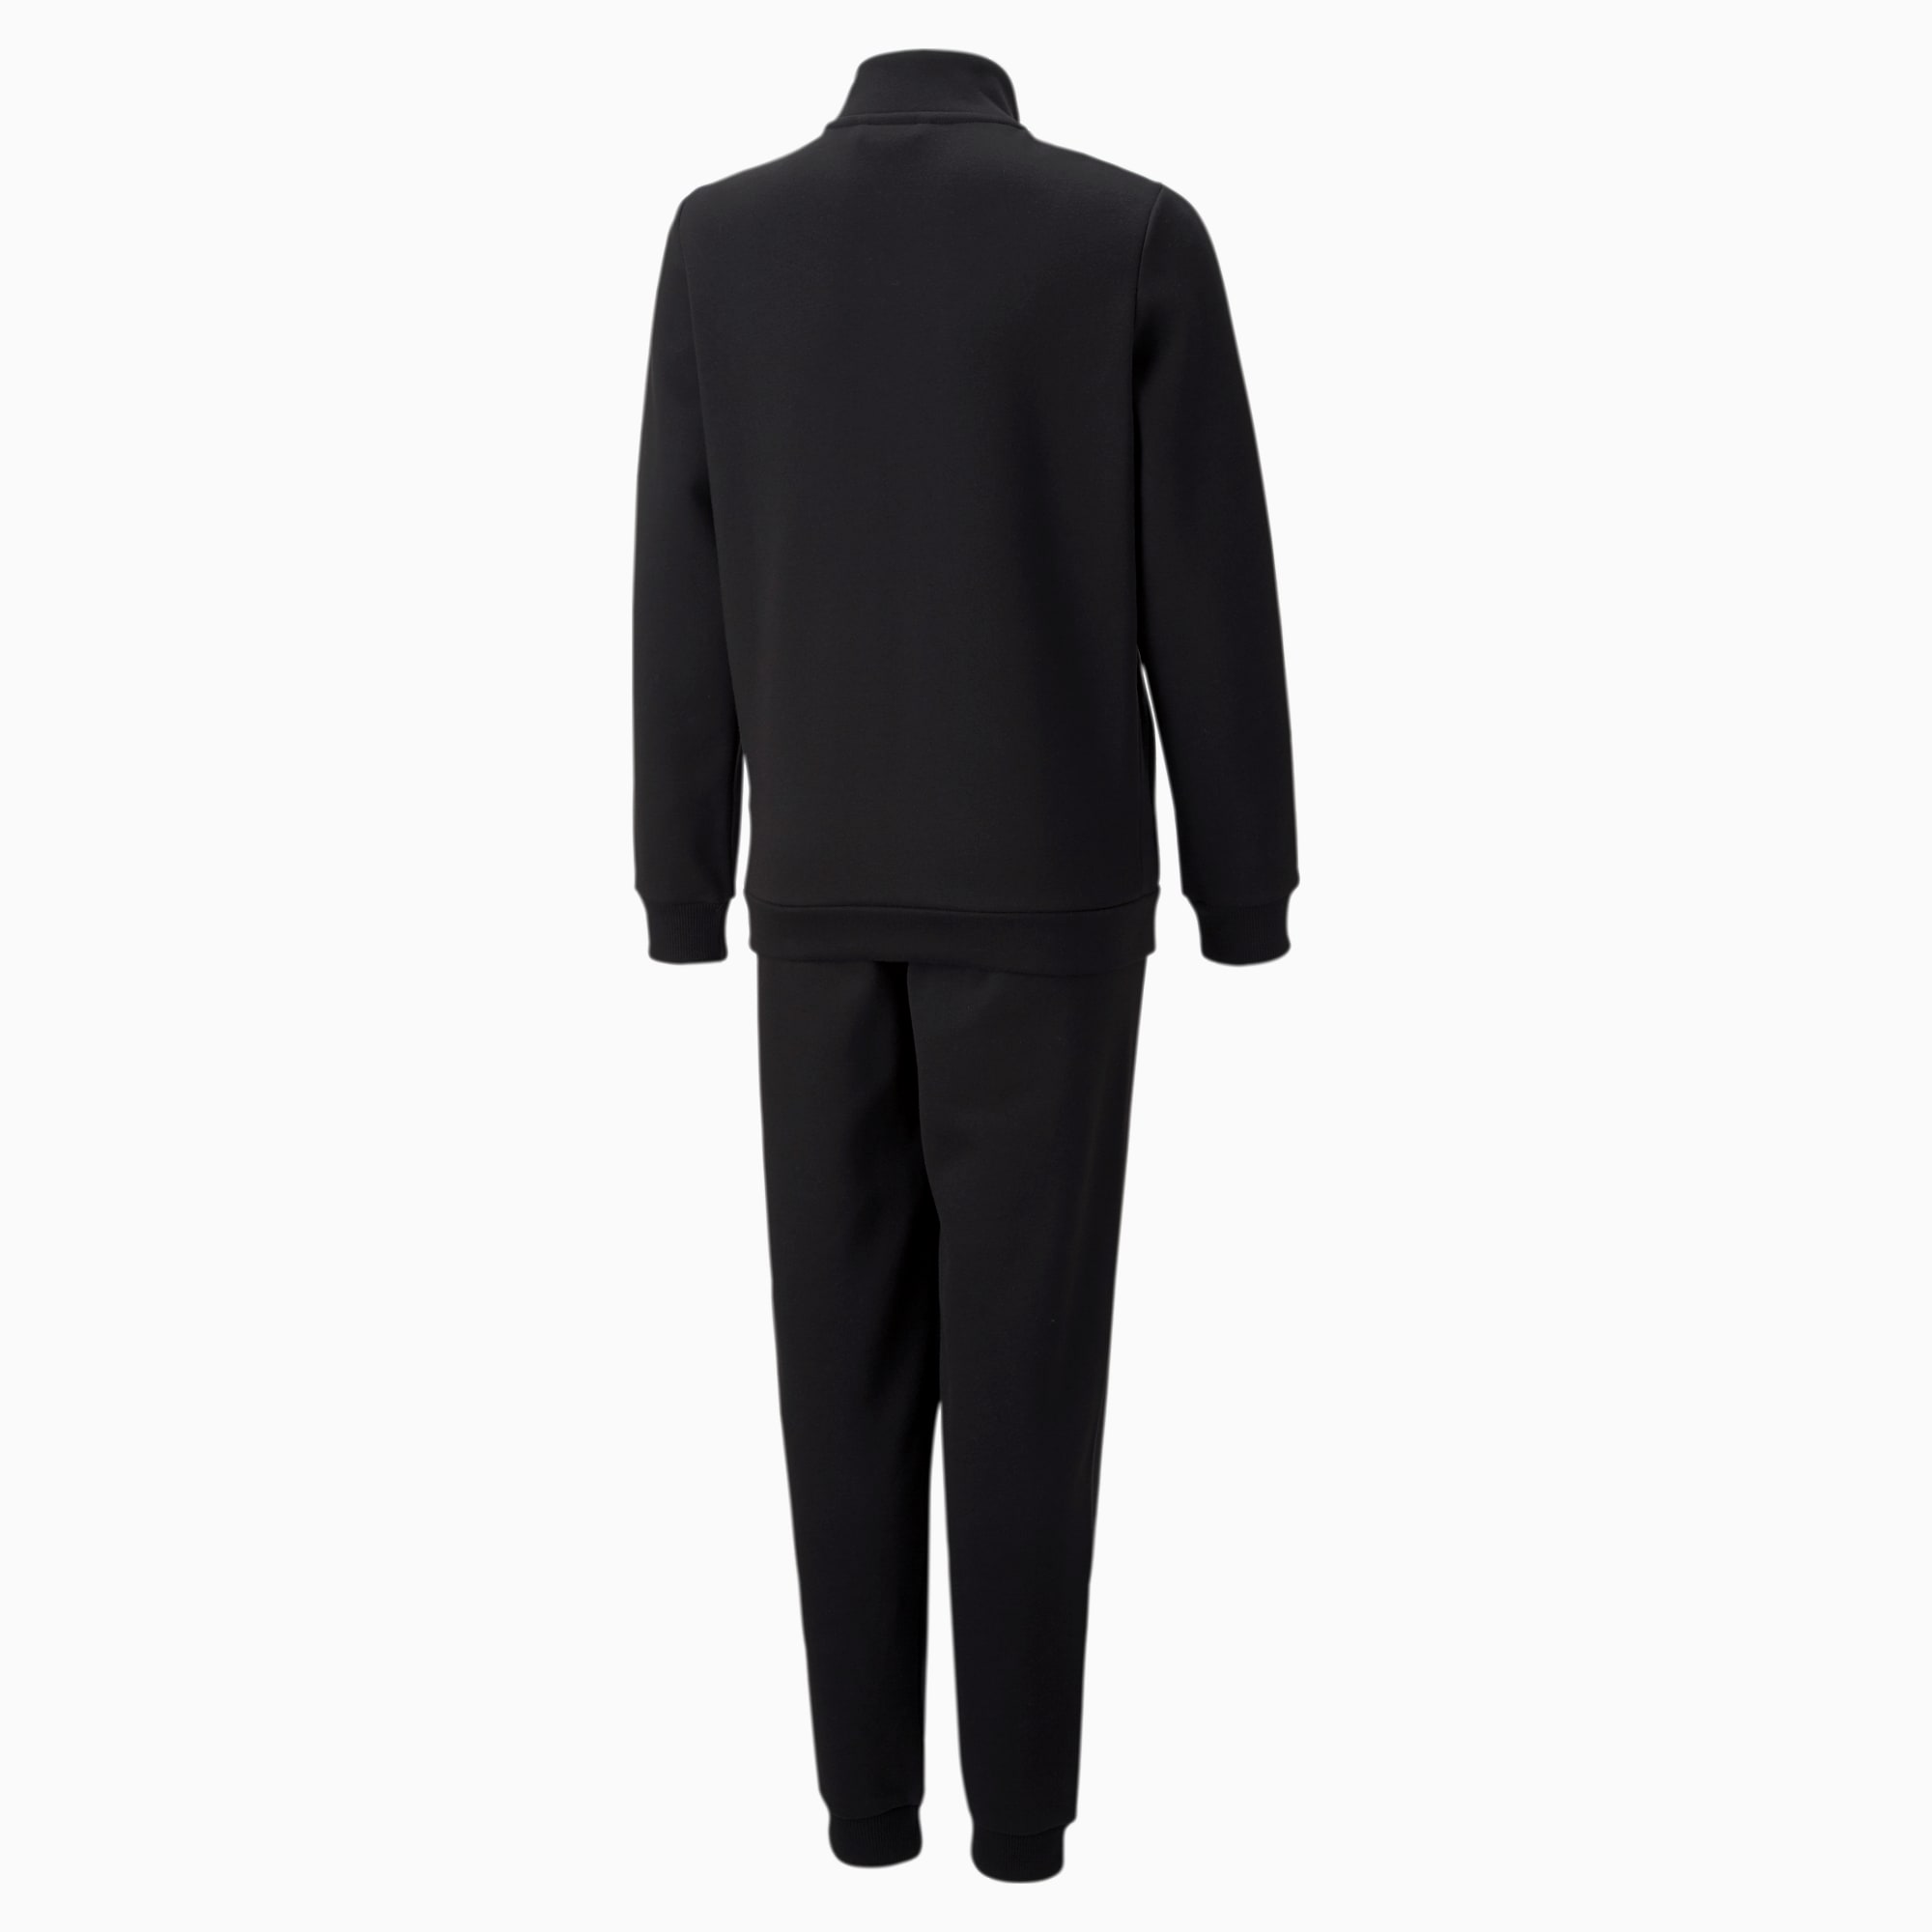 PUMA Tape Sweat Suit Youth, Black, Size 140, Clothing